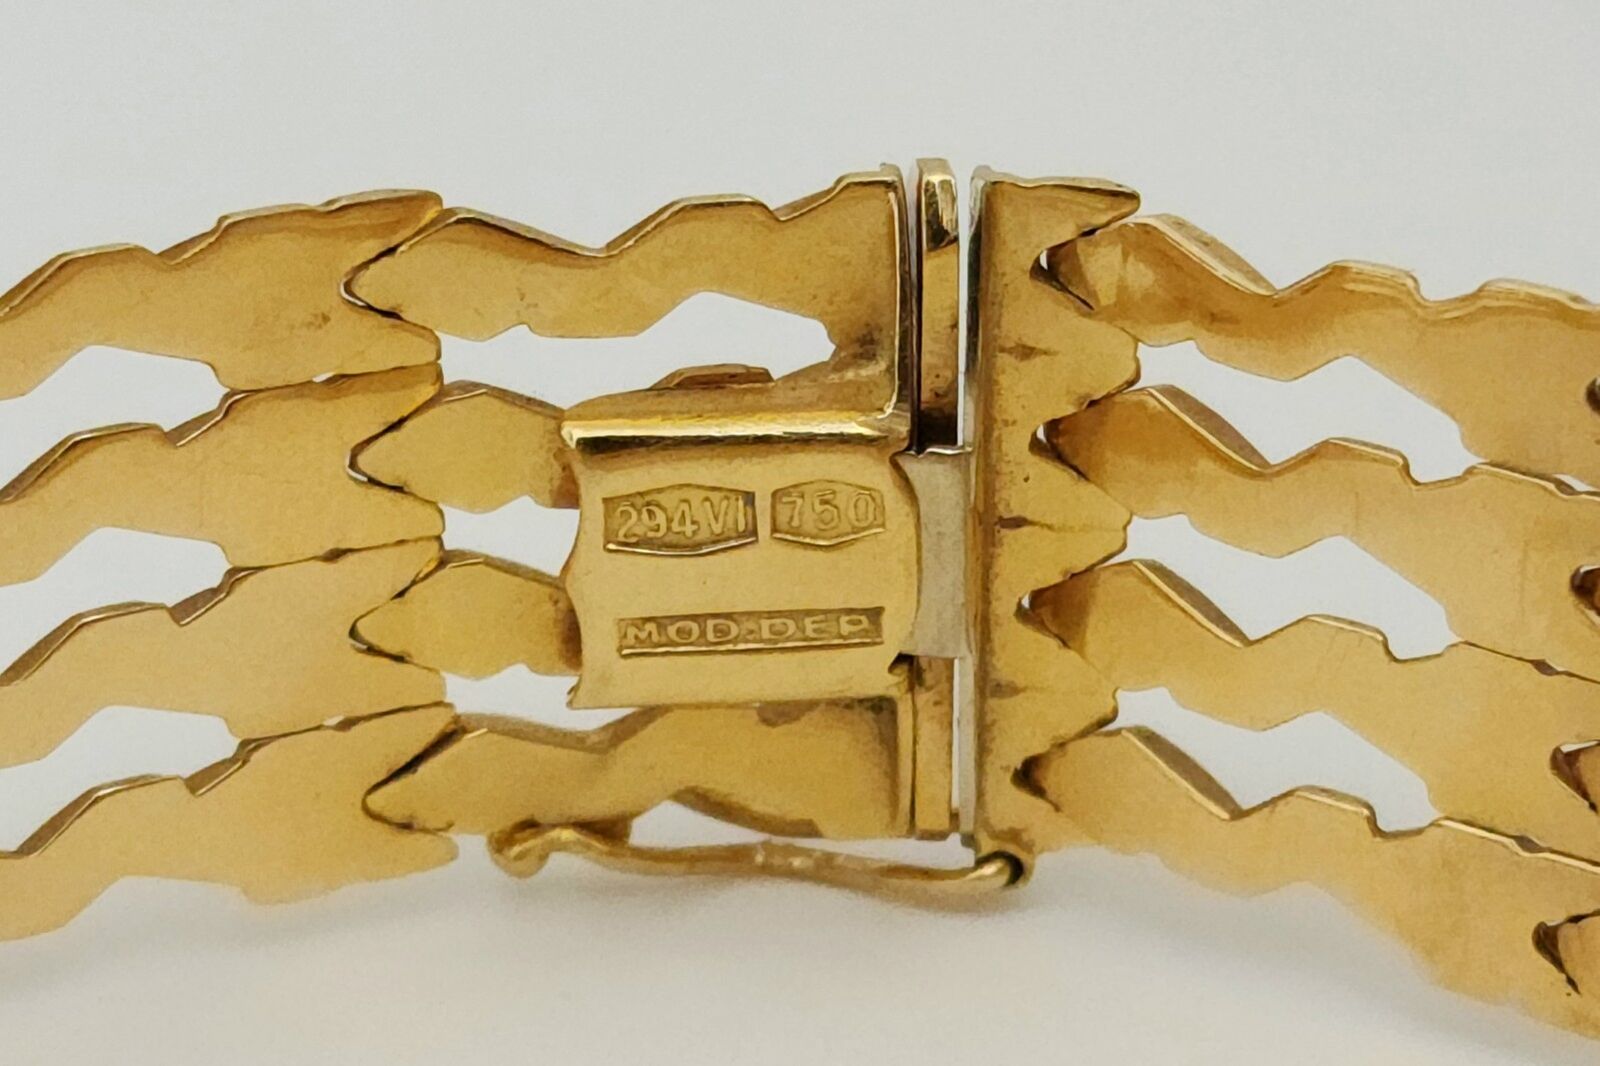 MOD DEP Italy 18K (750) Yellow Gold Wide Bracelet - image 6